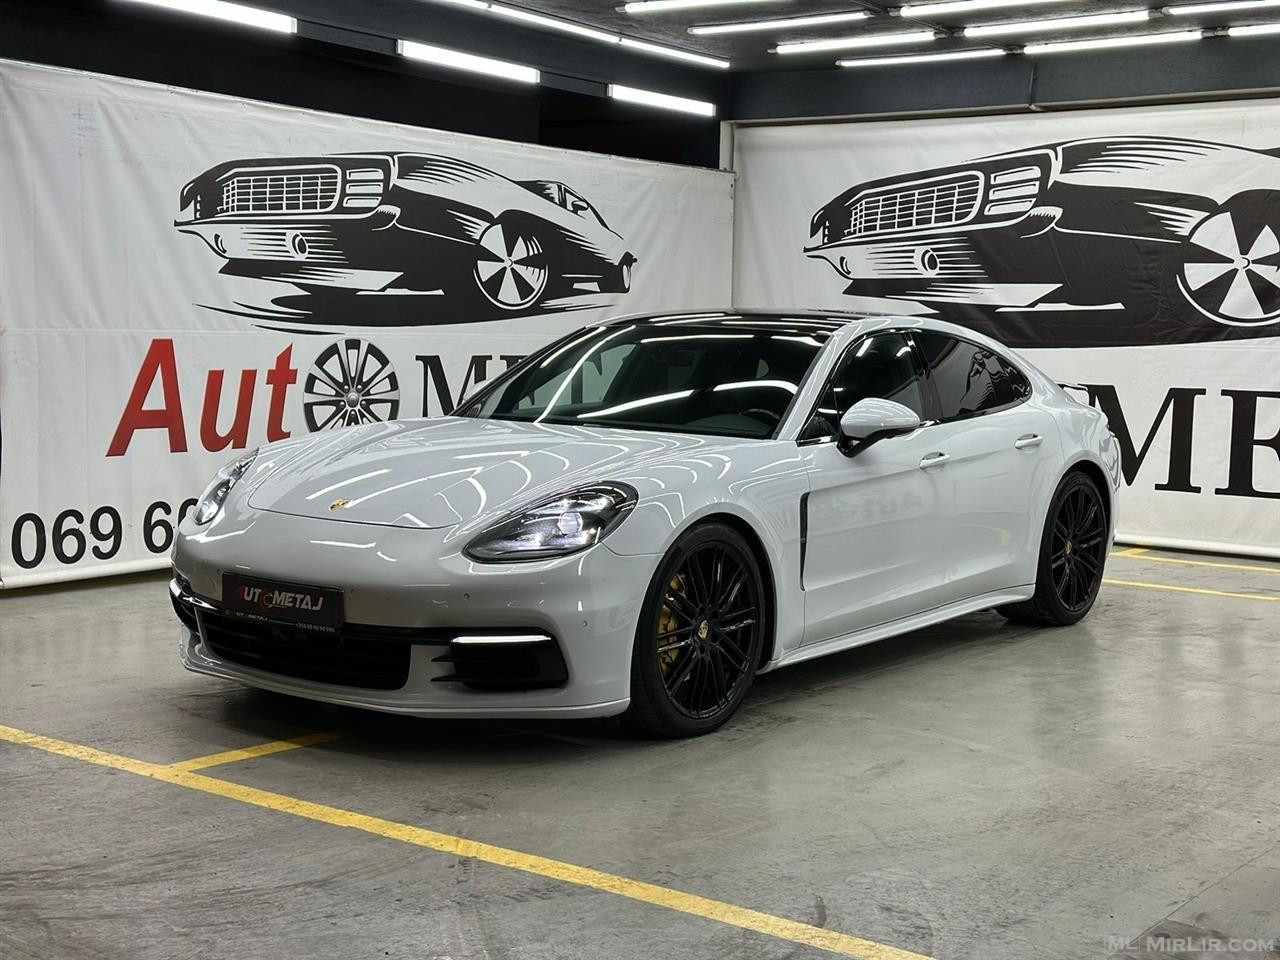  Porsche Panamera 4S  Viti Prodhimit Fundi 2016  4.0 Diesel